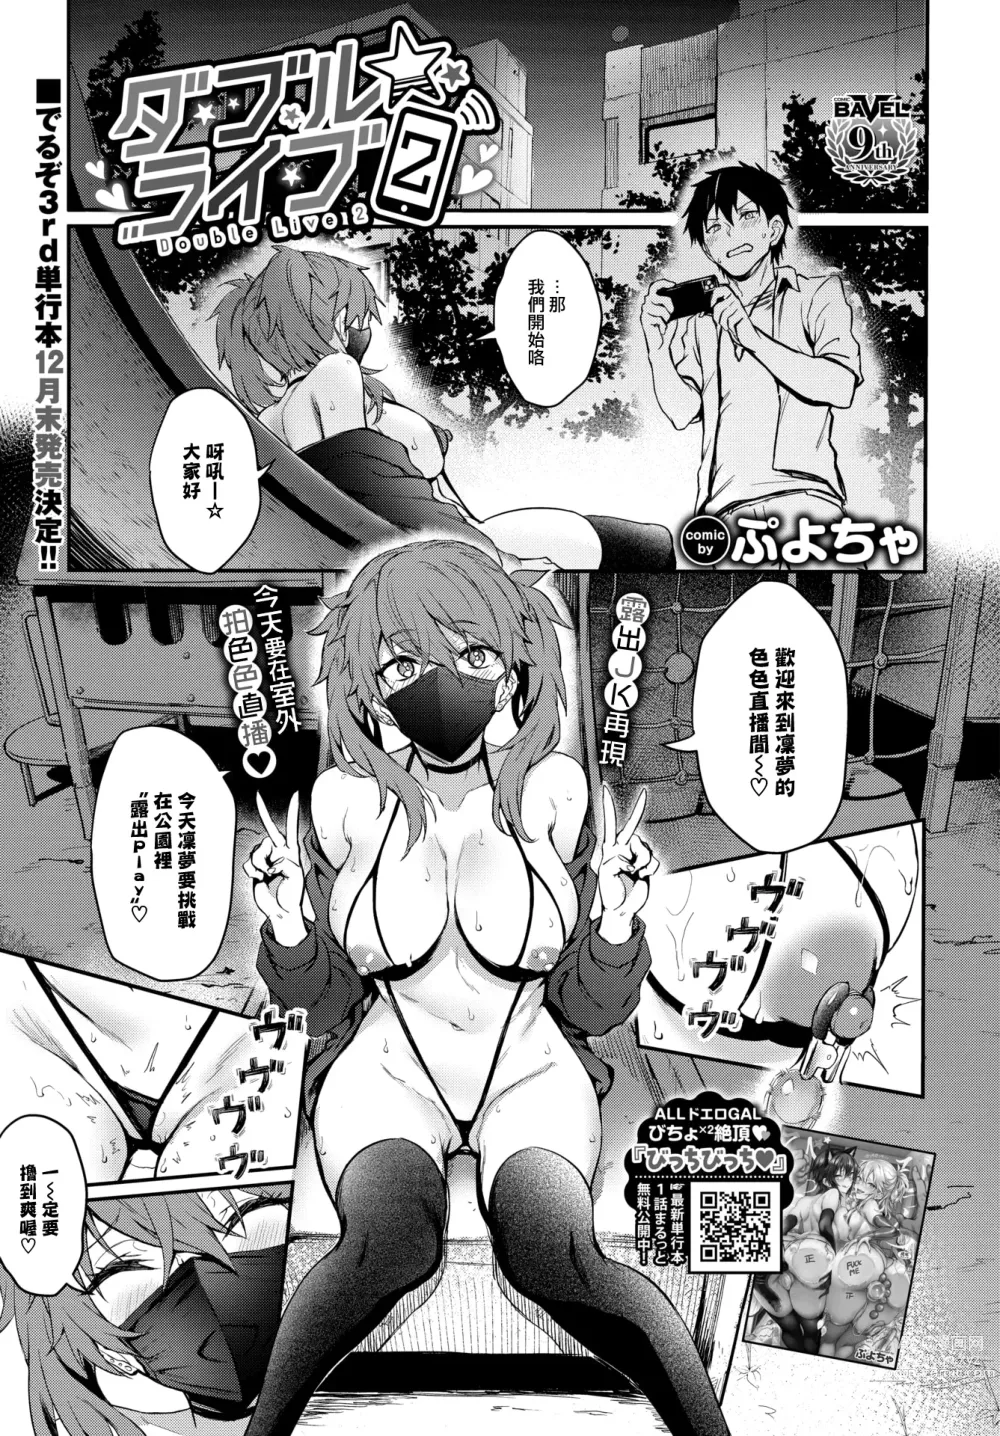 Page 2 of manga Double★Live2